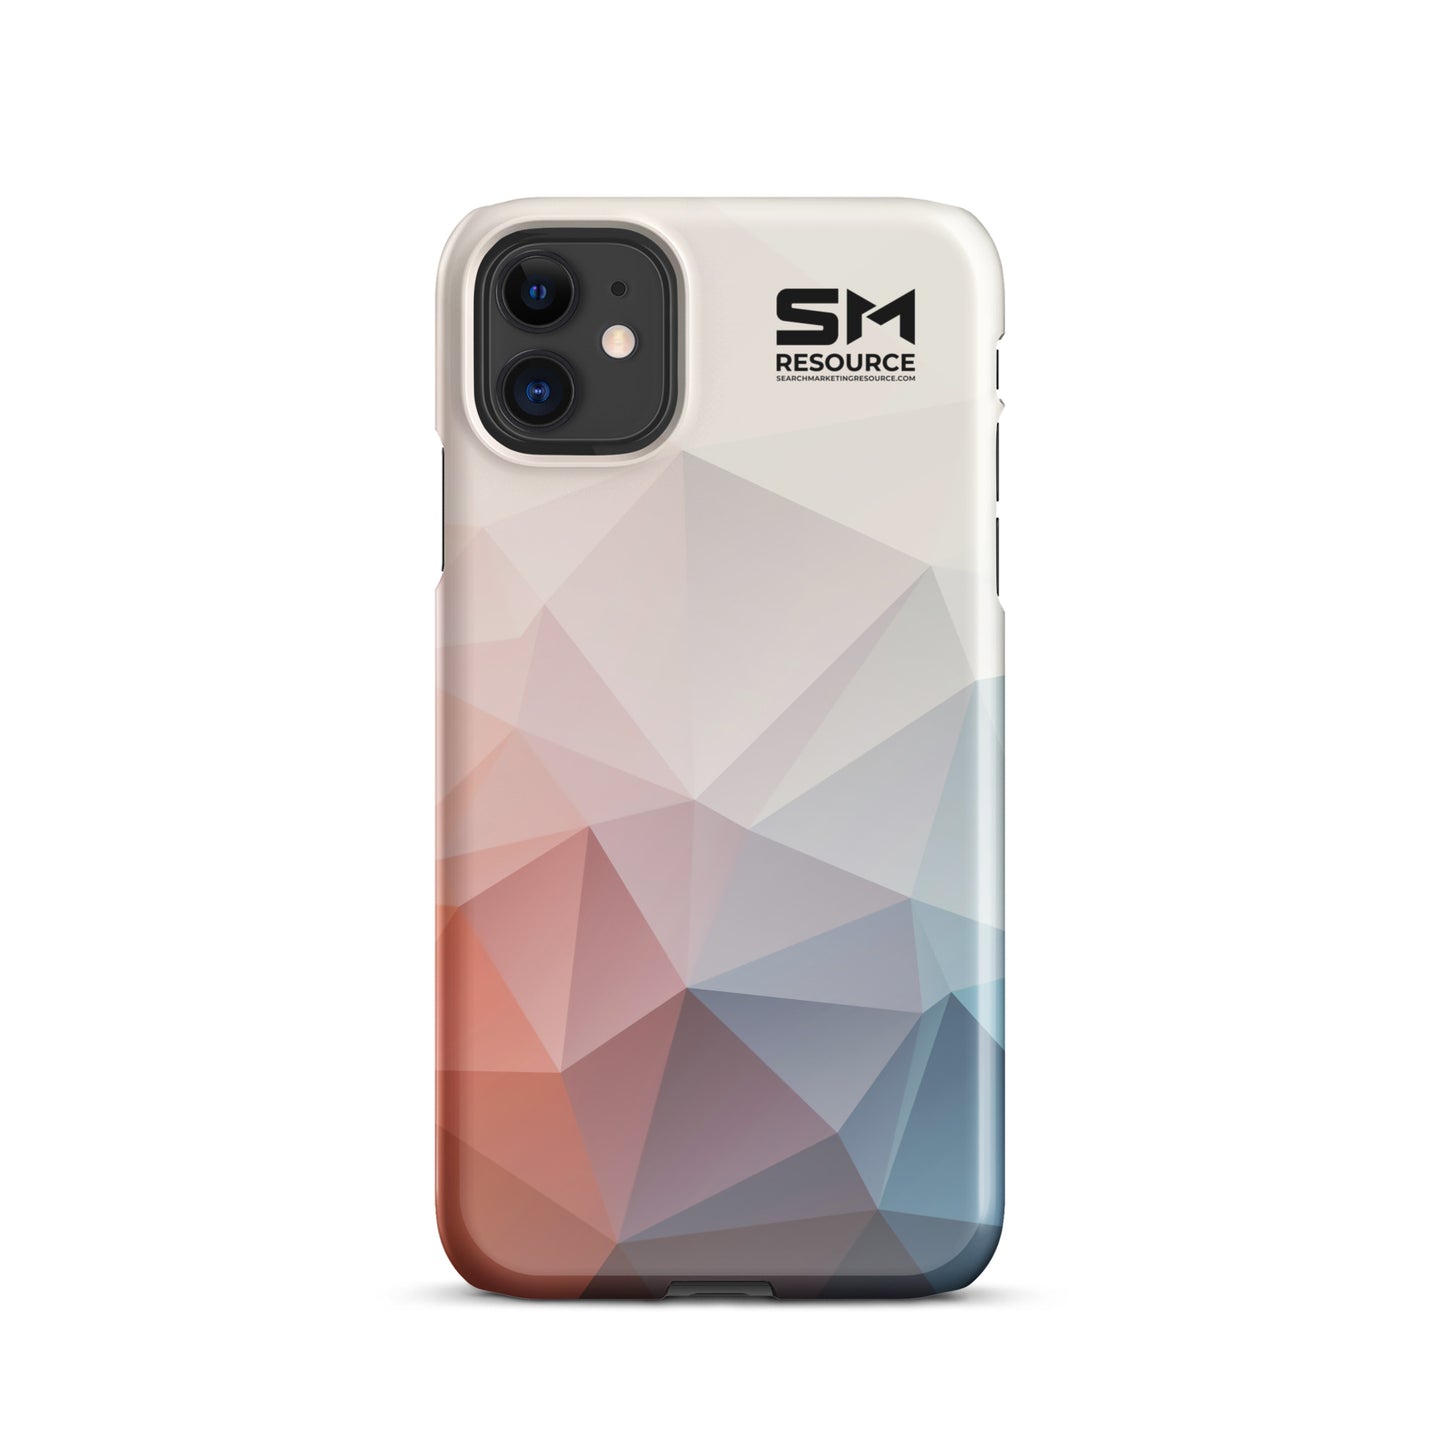 SMR iPhone Case